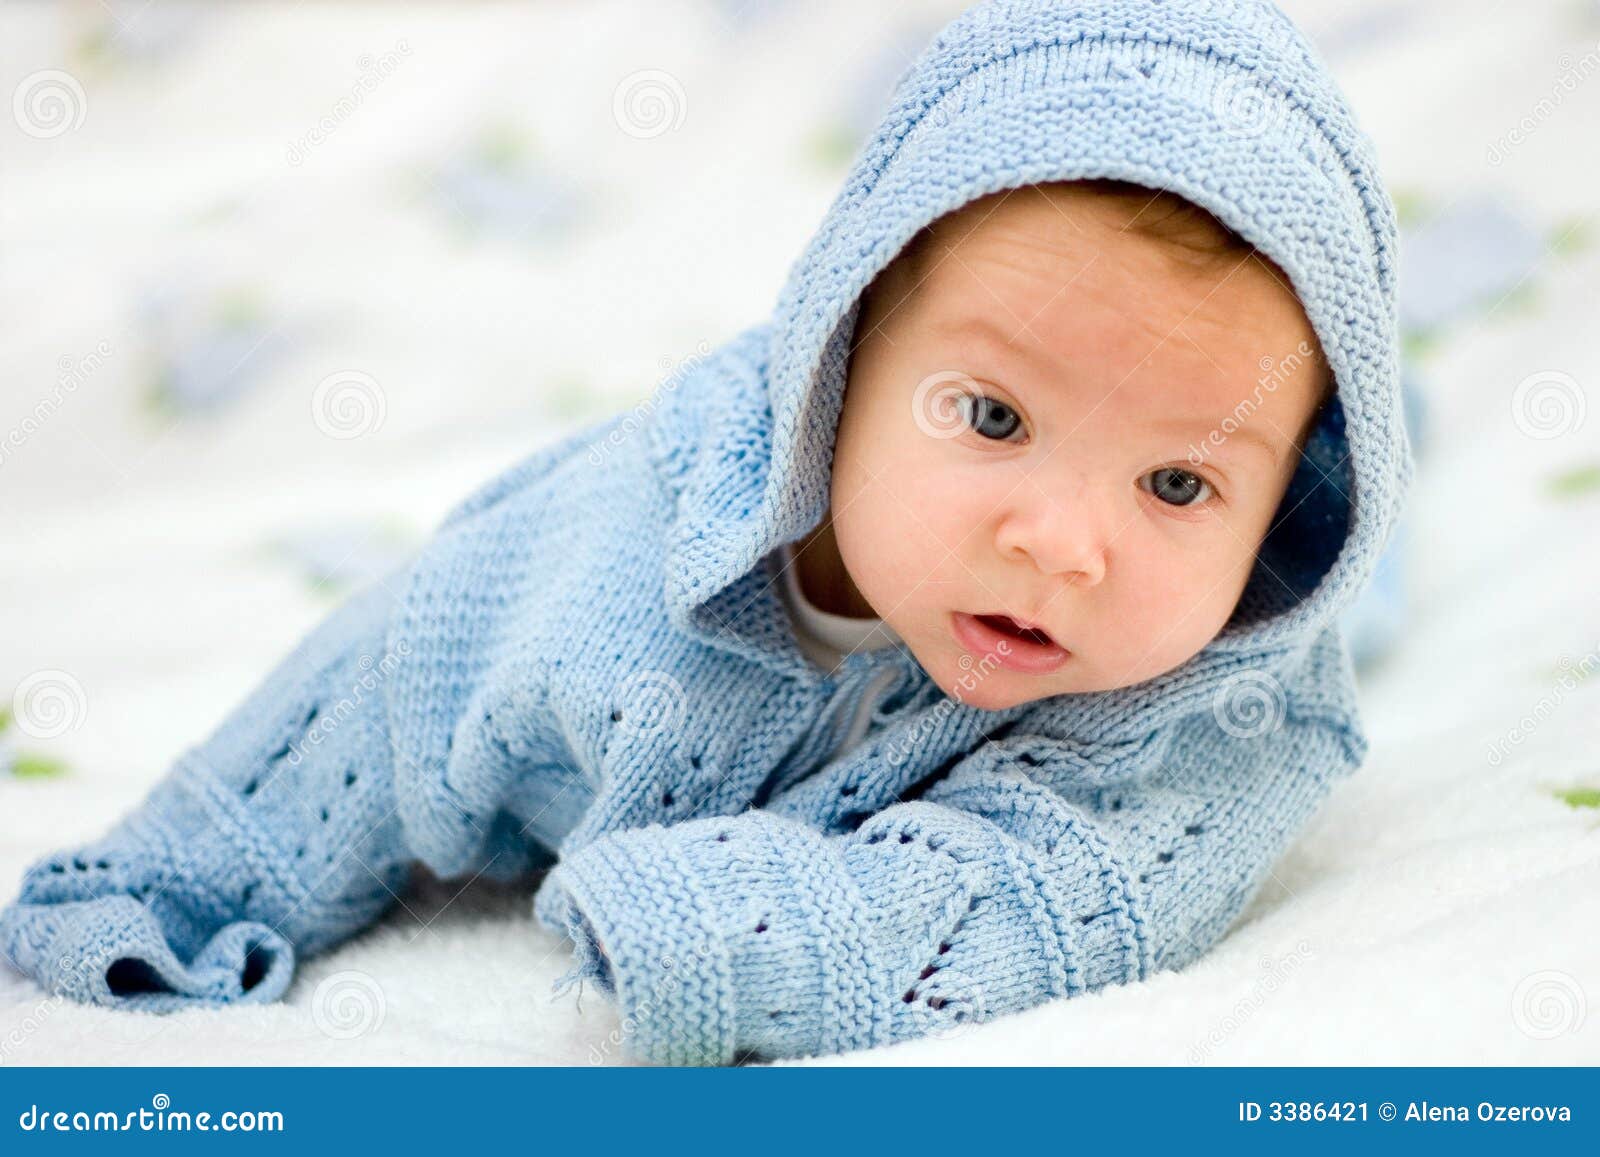 Baby in blue jacket stock image. Image of jacket, caucasian - 3386421